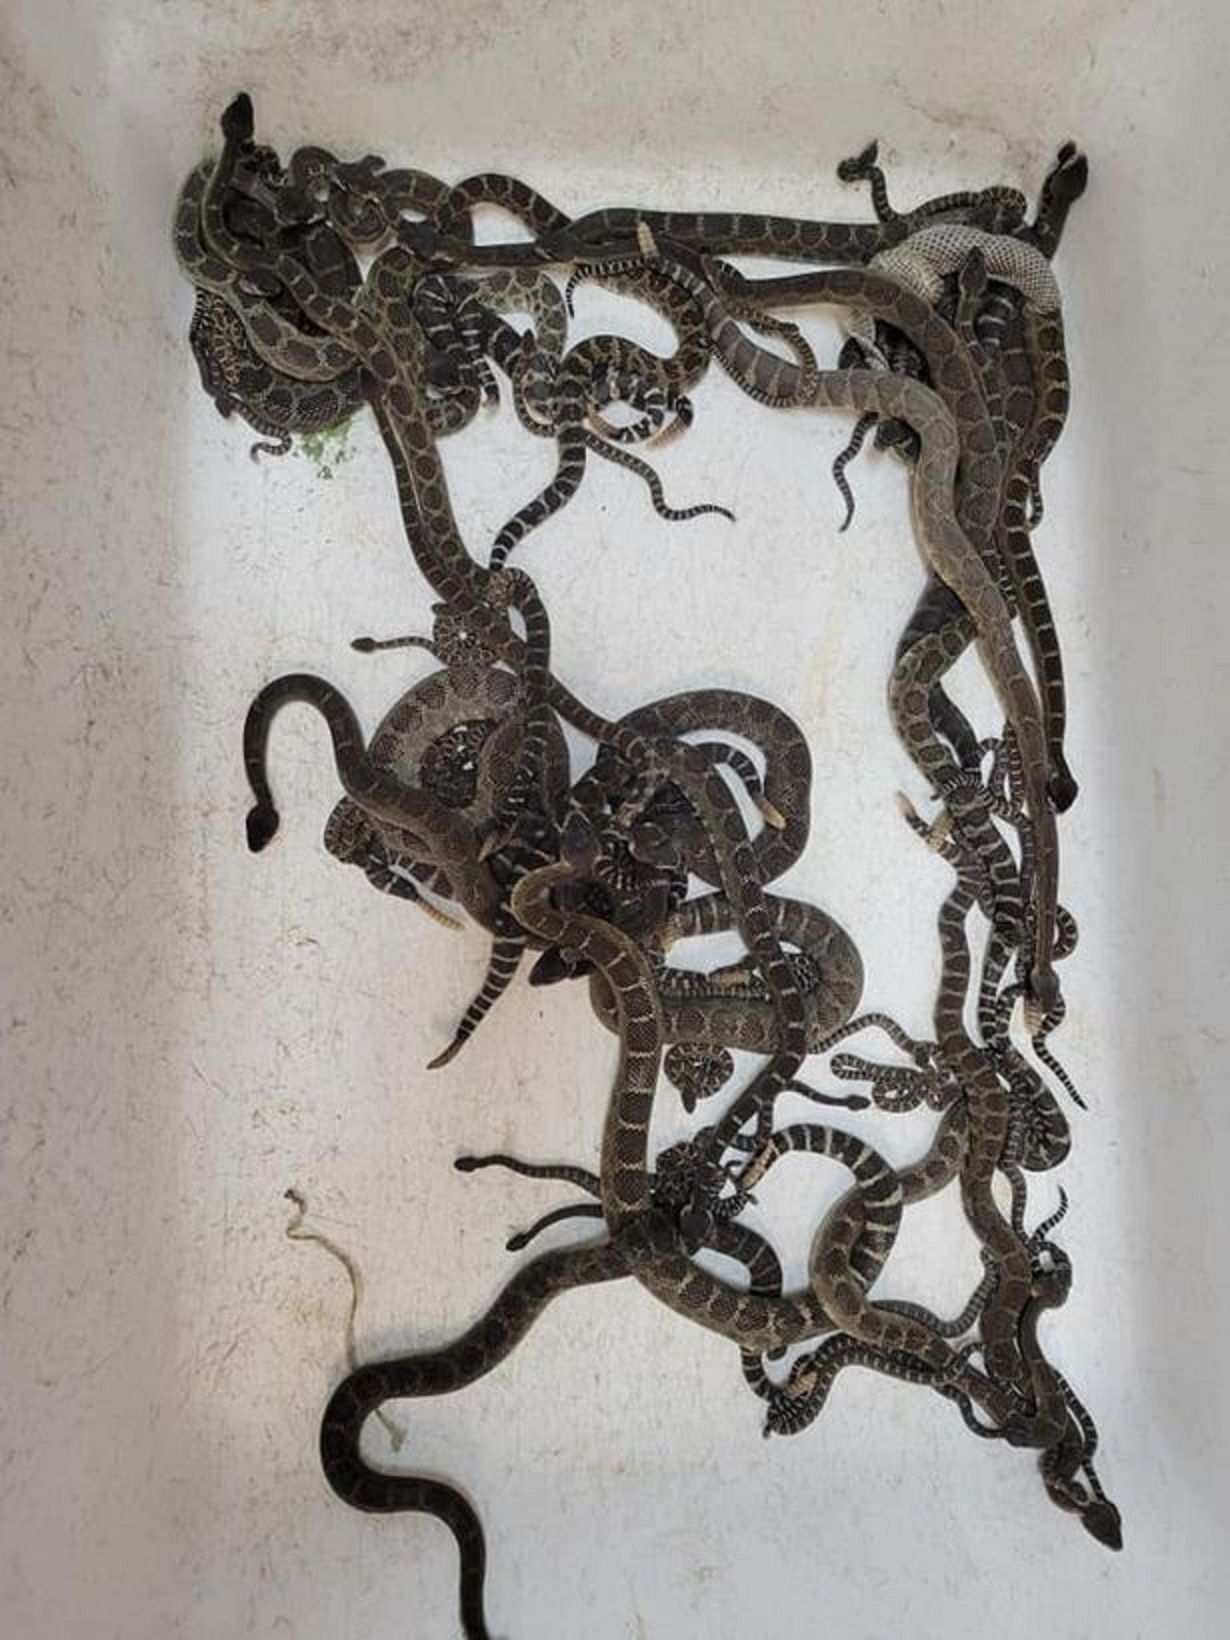 Butuh waktu hampir empat jam bagi tim Penyelamatan Reptil Sonoma County di California untuk mengeluarkan ular-ular itu dengan aman. / 